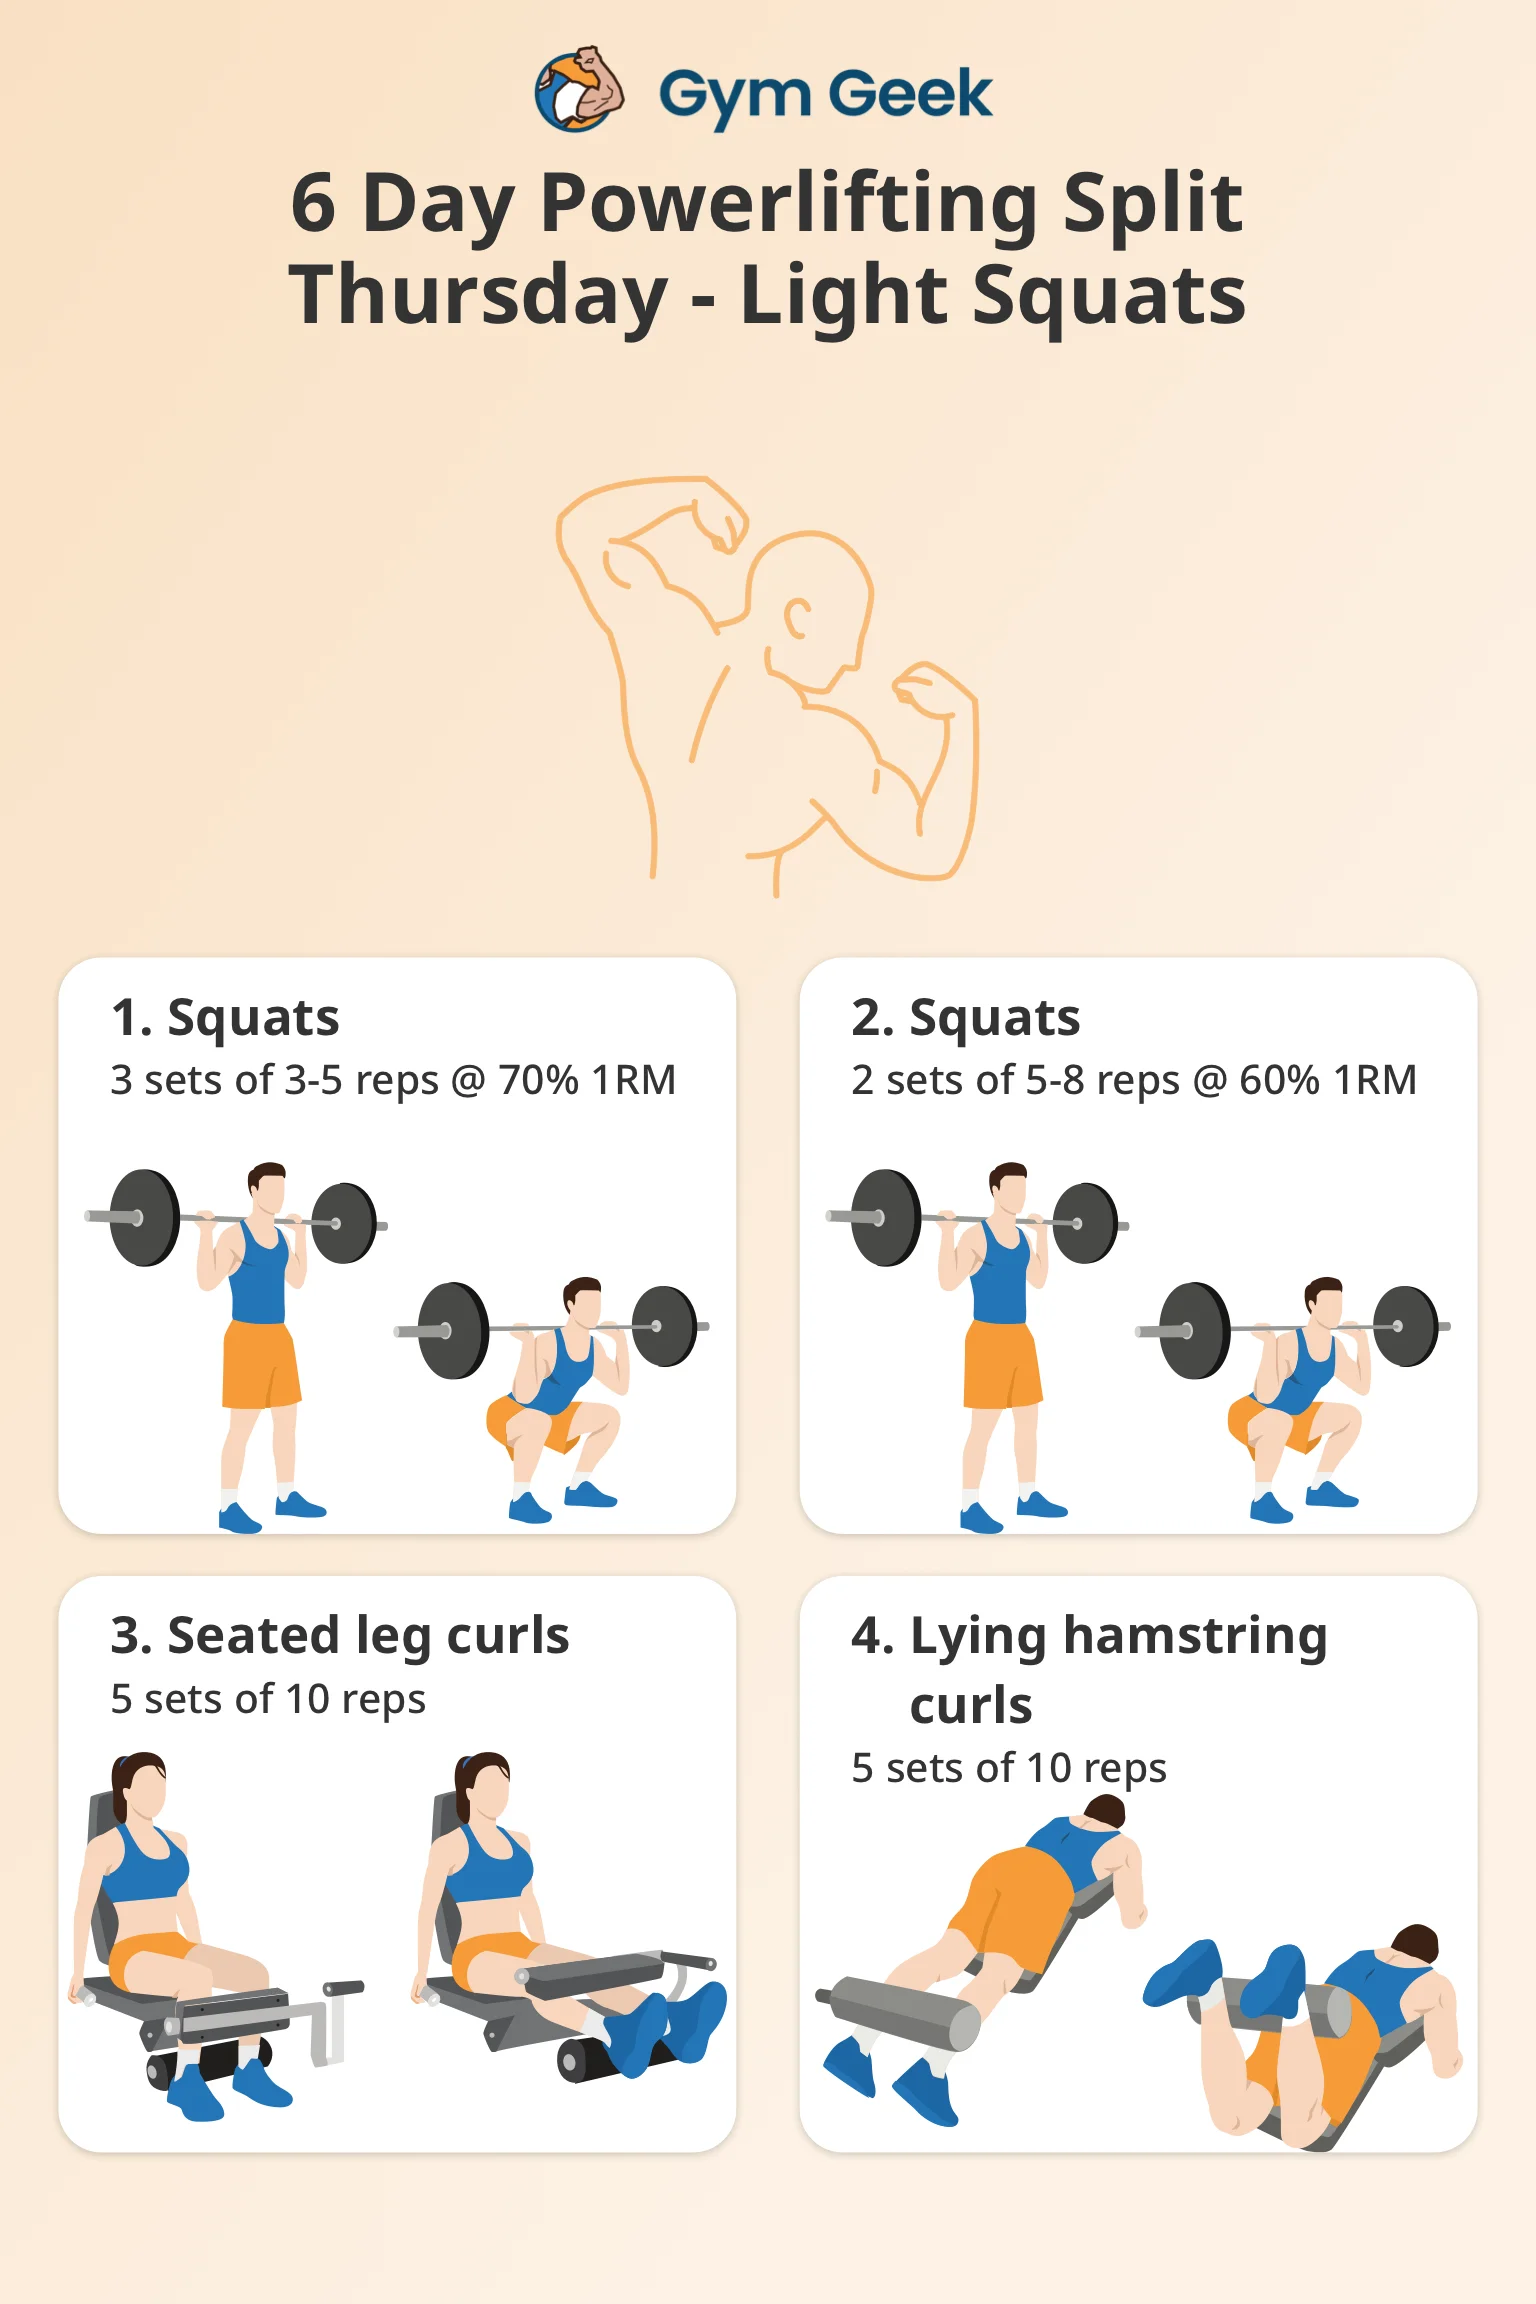 infographic - 6 day powerlifting program - Thursday - Light Squats